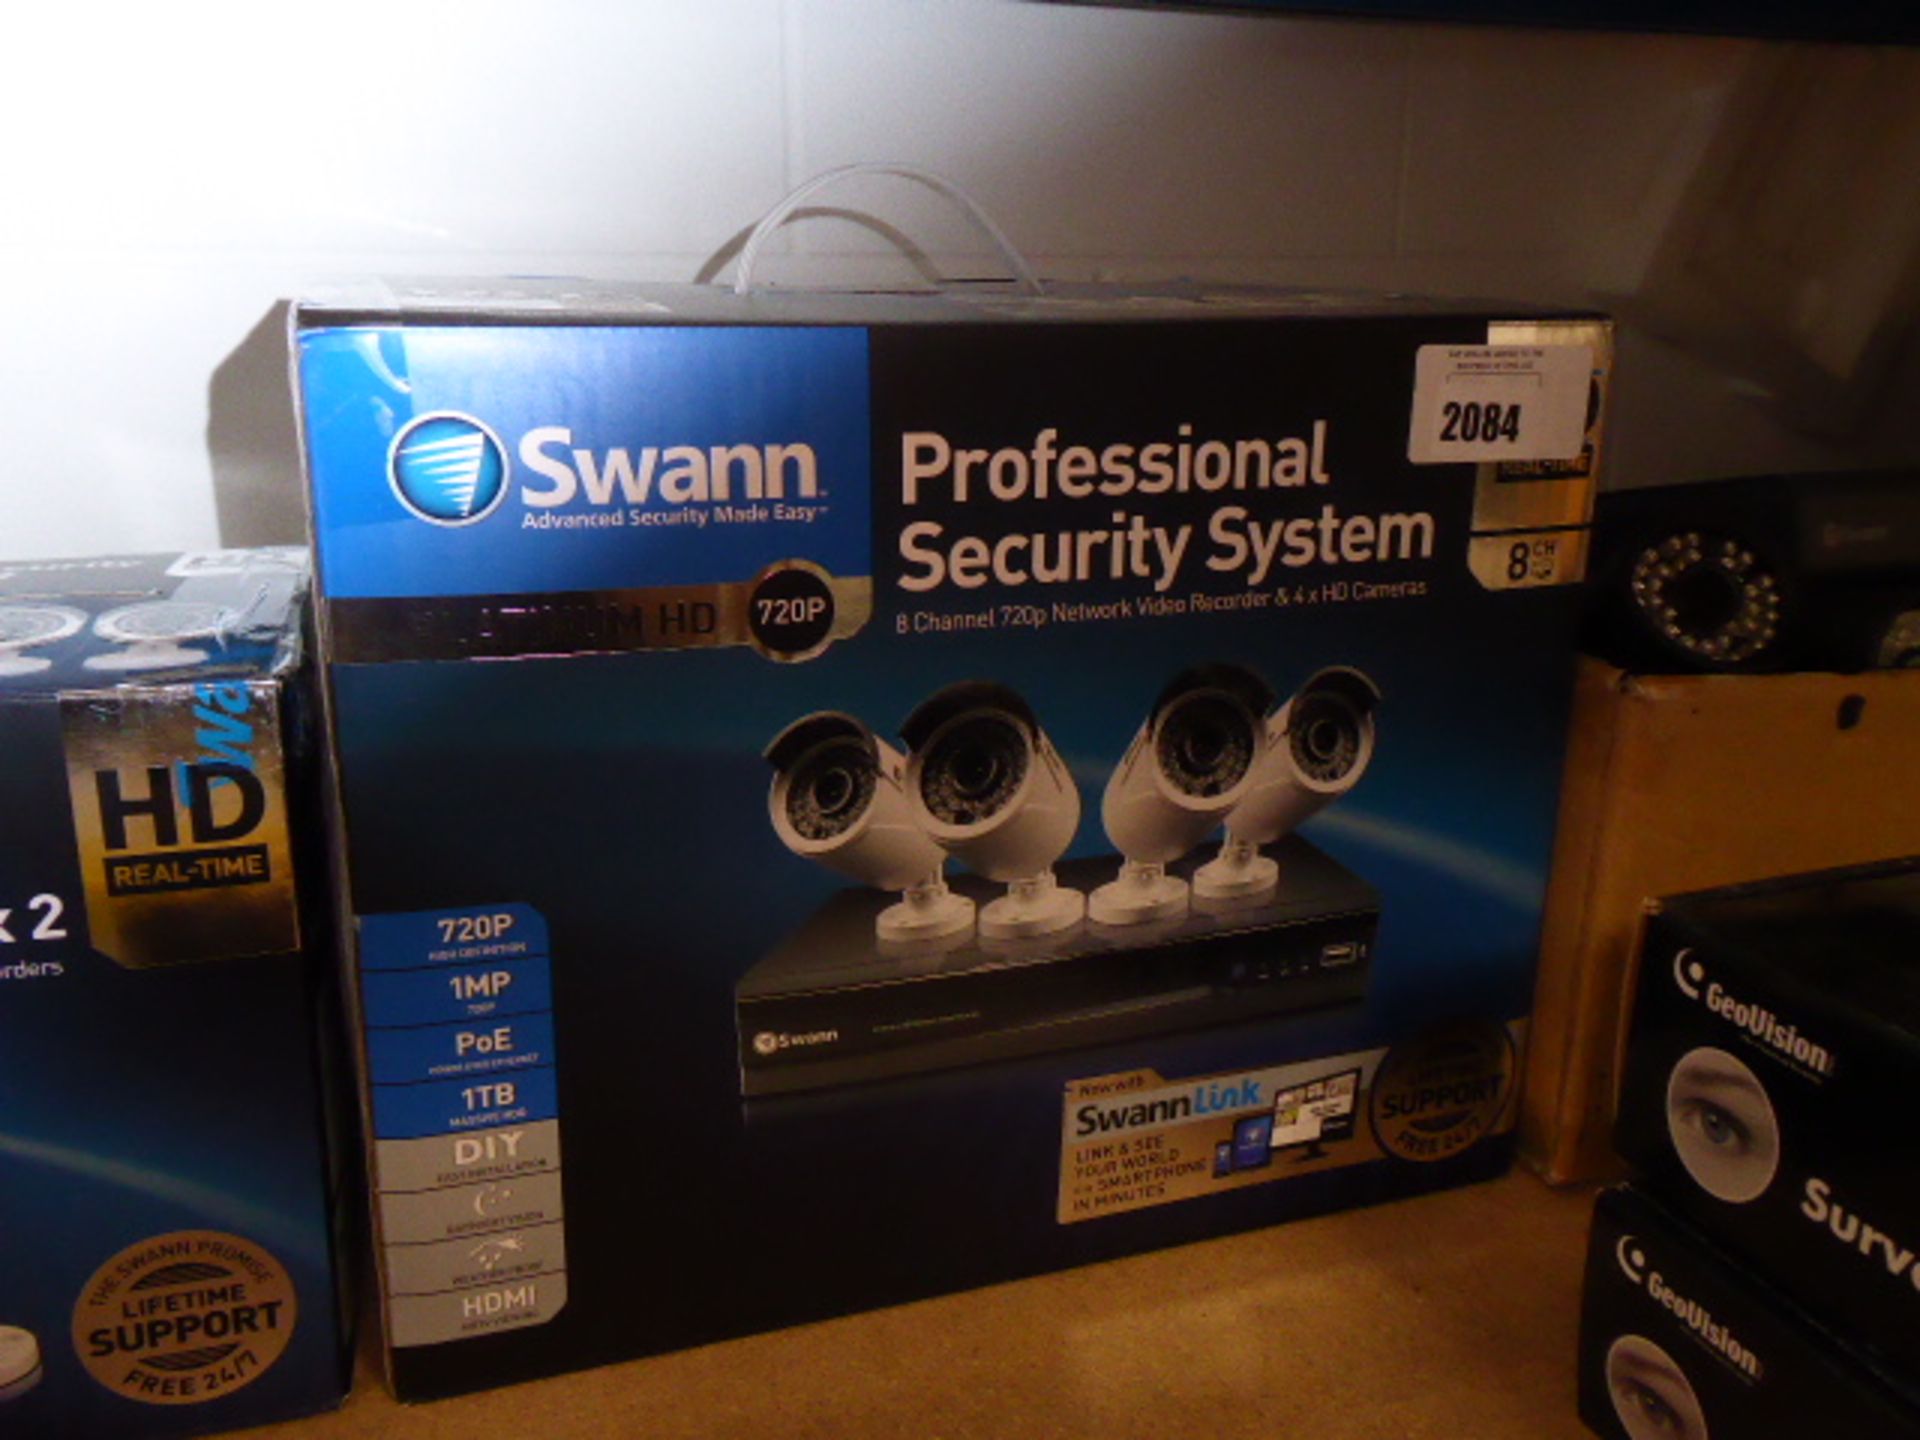 Swan professional platinum HD 720p CCTV recorder kit in box